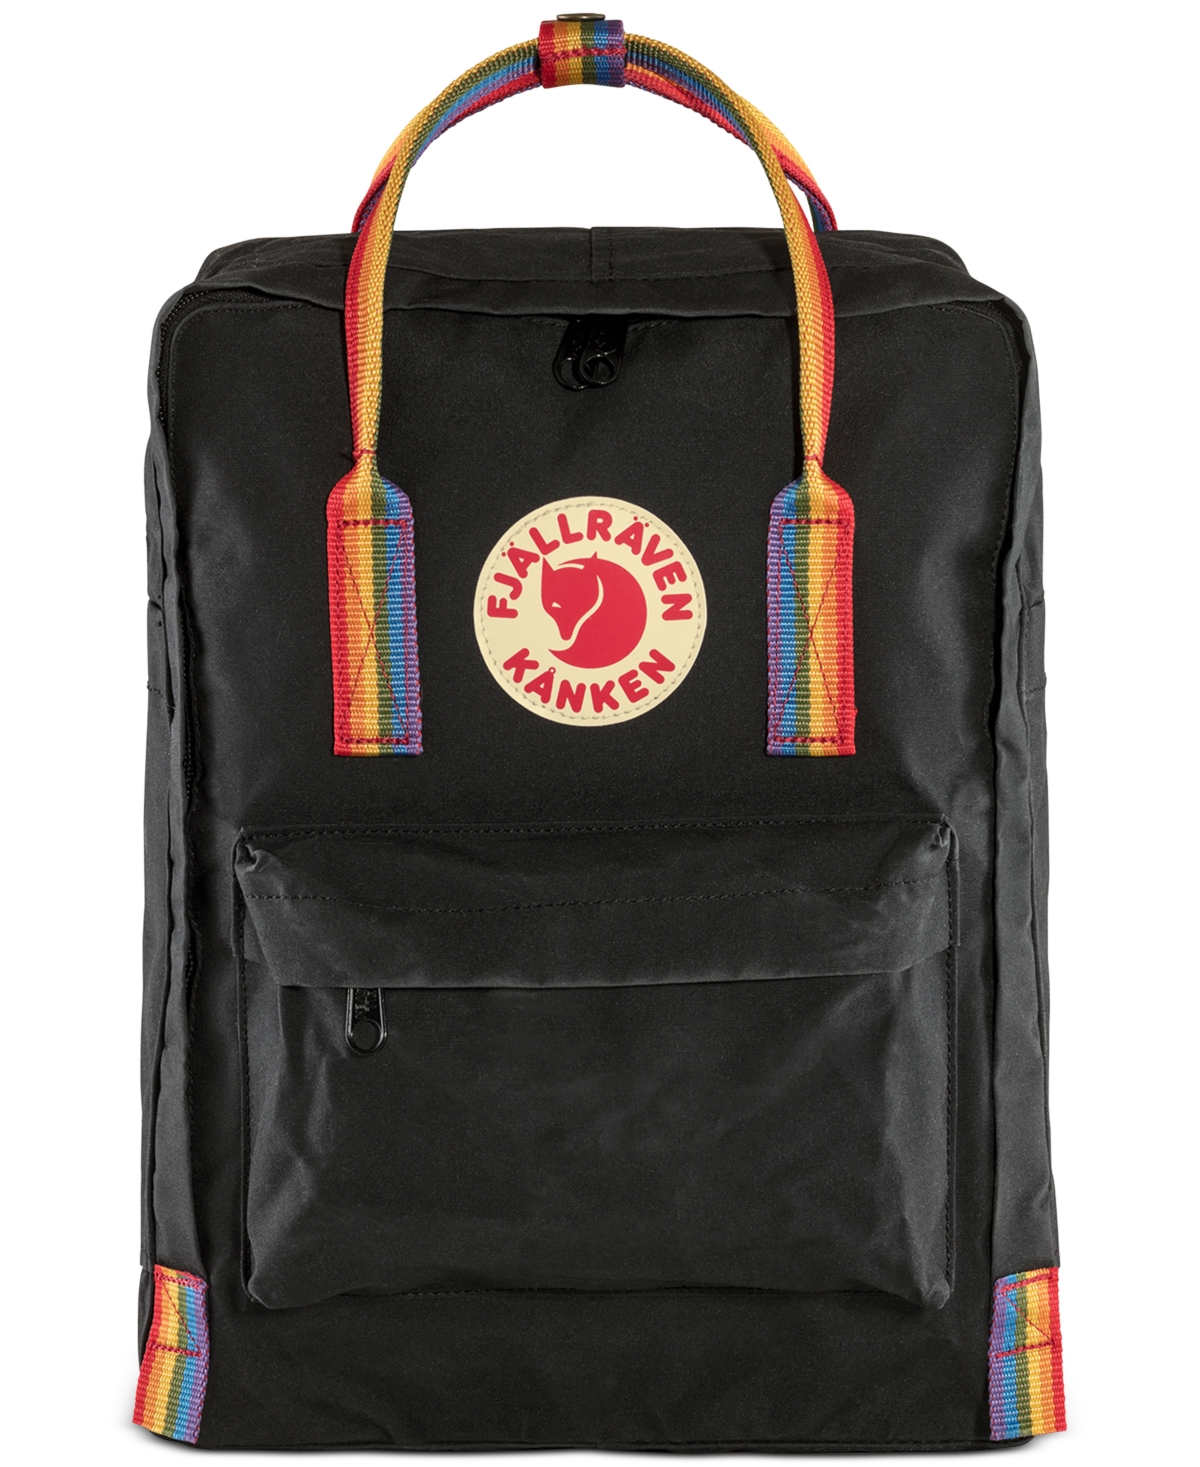 Kanken Rainbow Backpack - Black/Rainbow